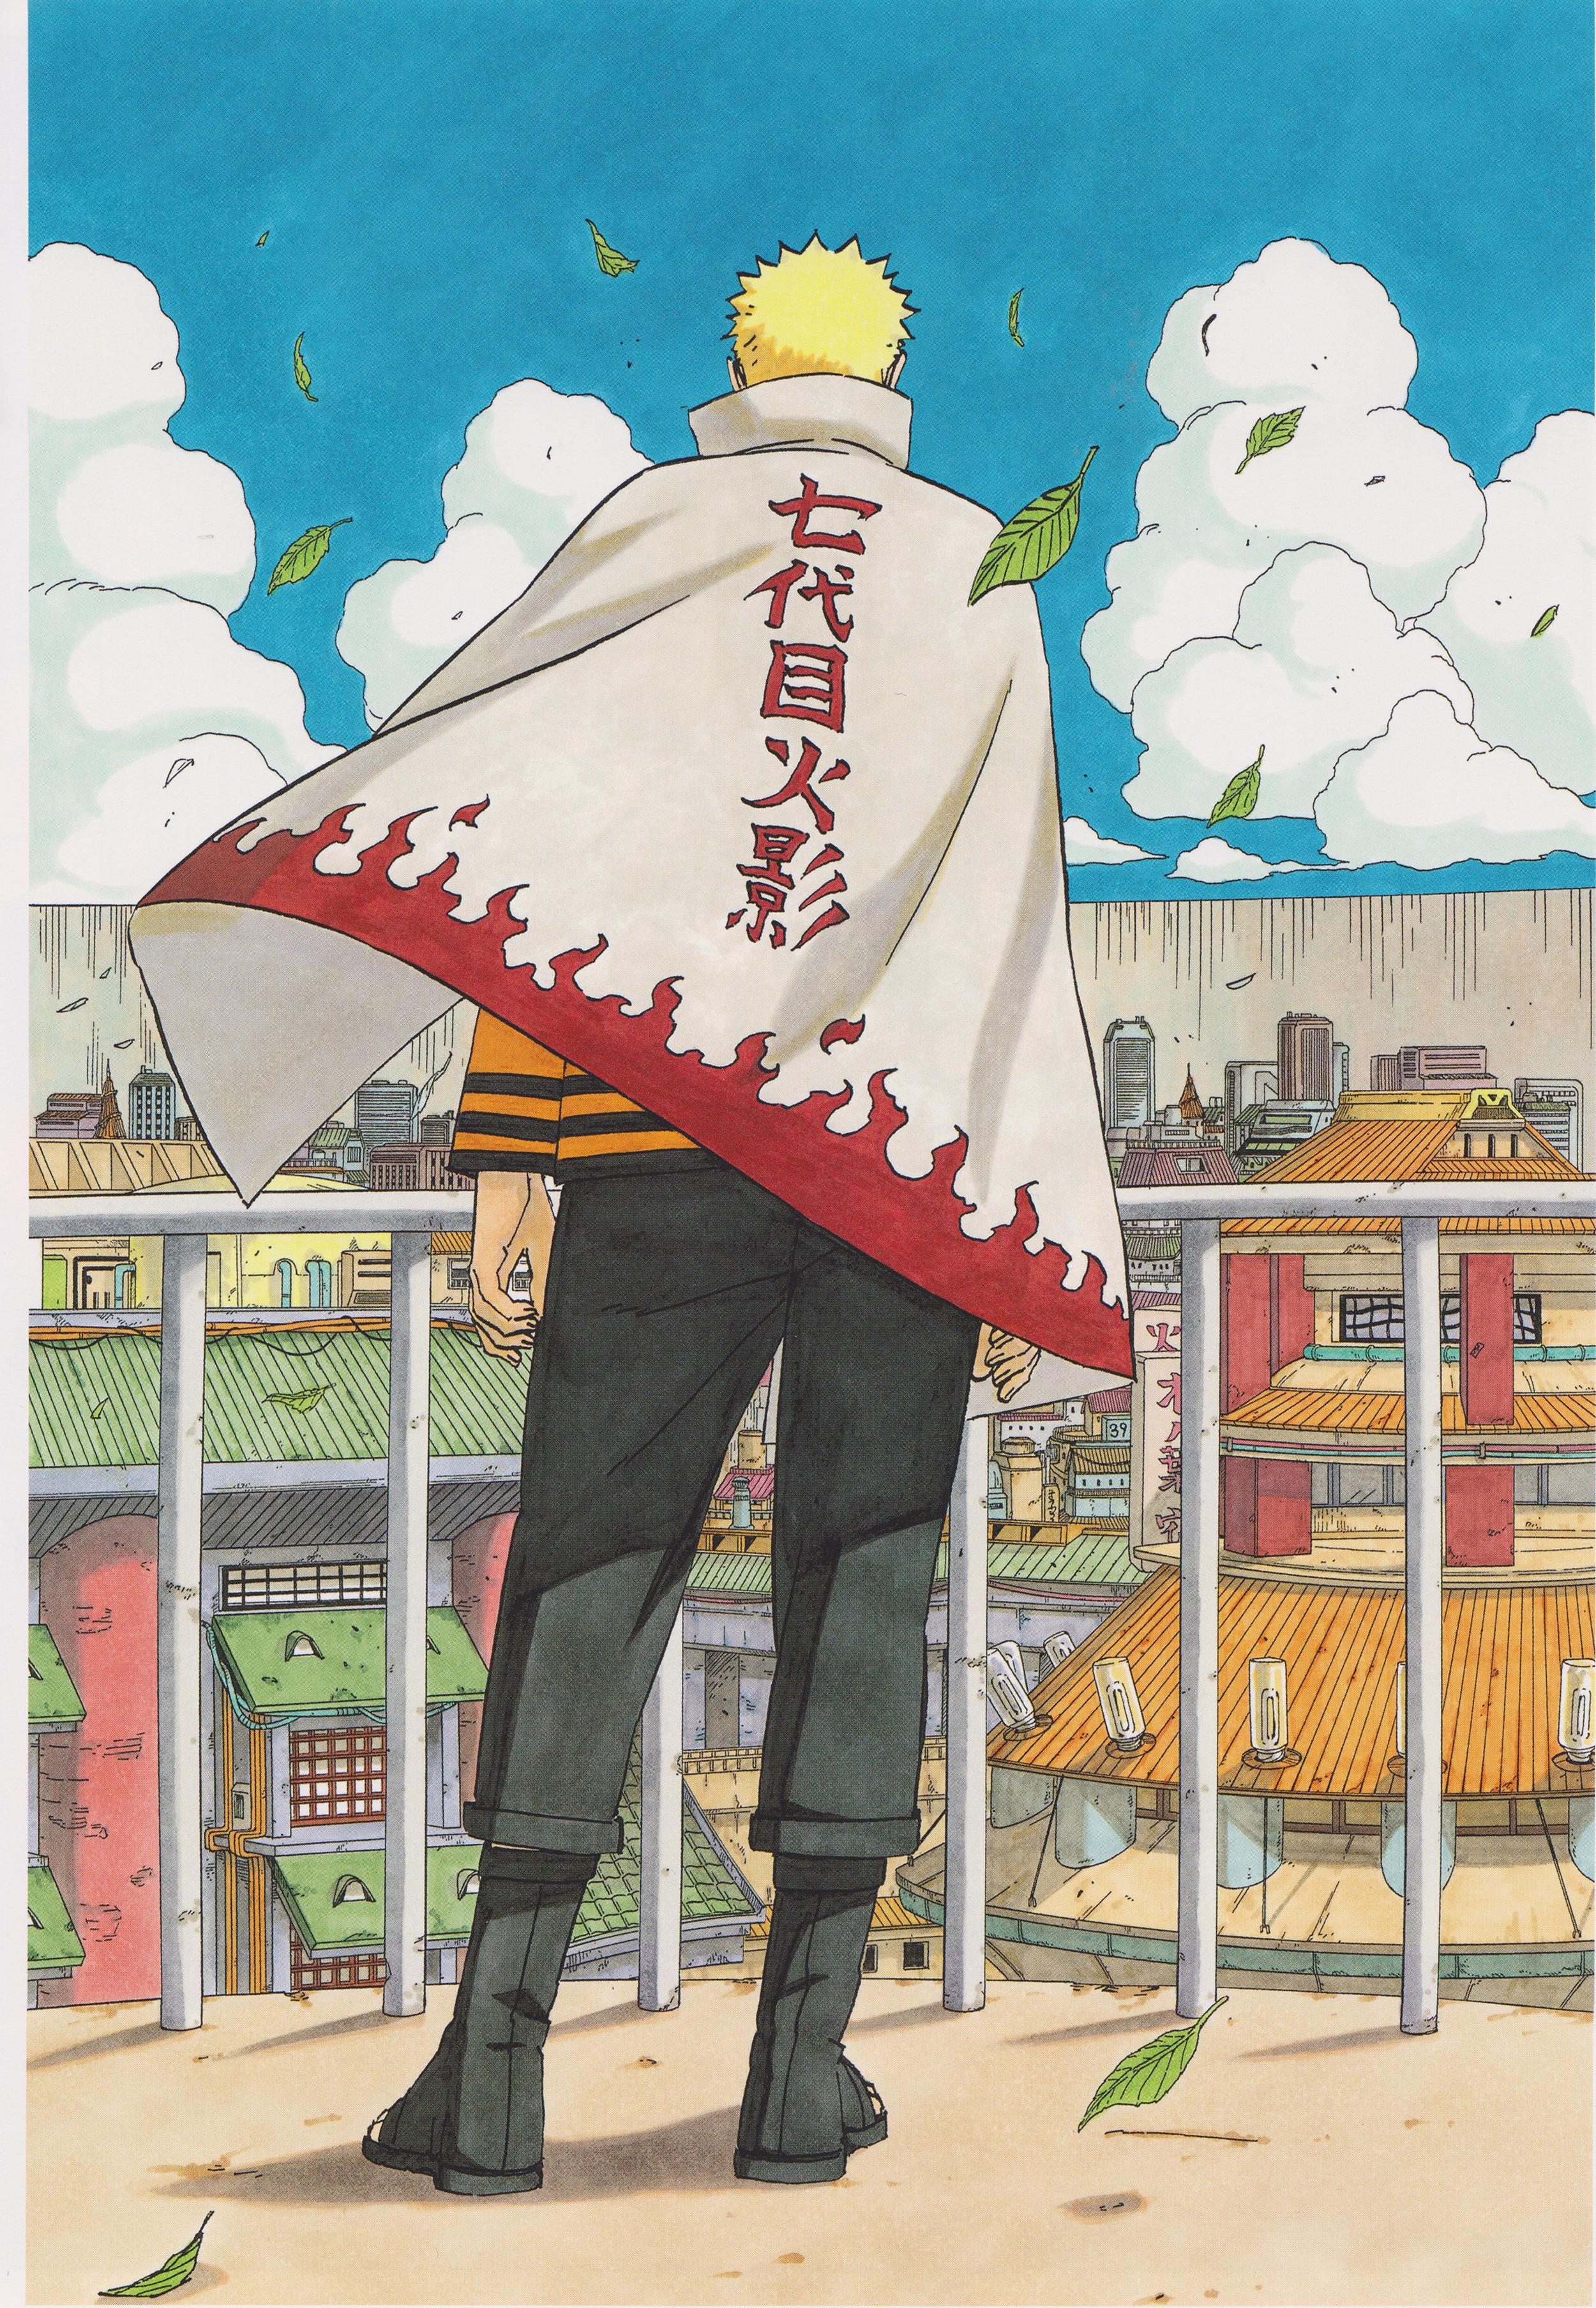 naruto hokage - Naruto & Anime Background Wallpapers on Desktop Nexus  (Image 615392)